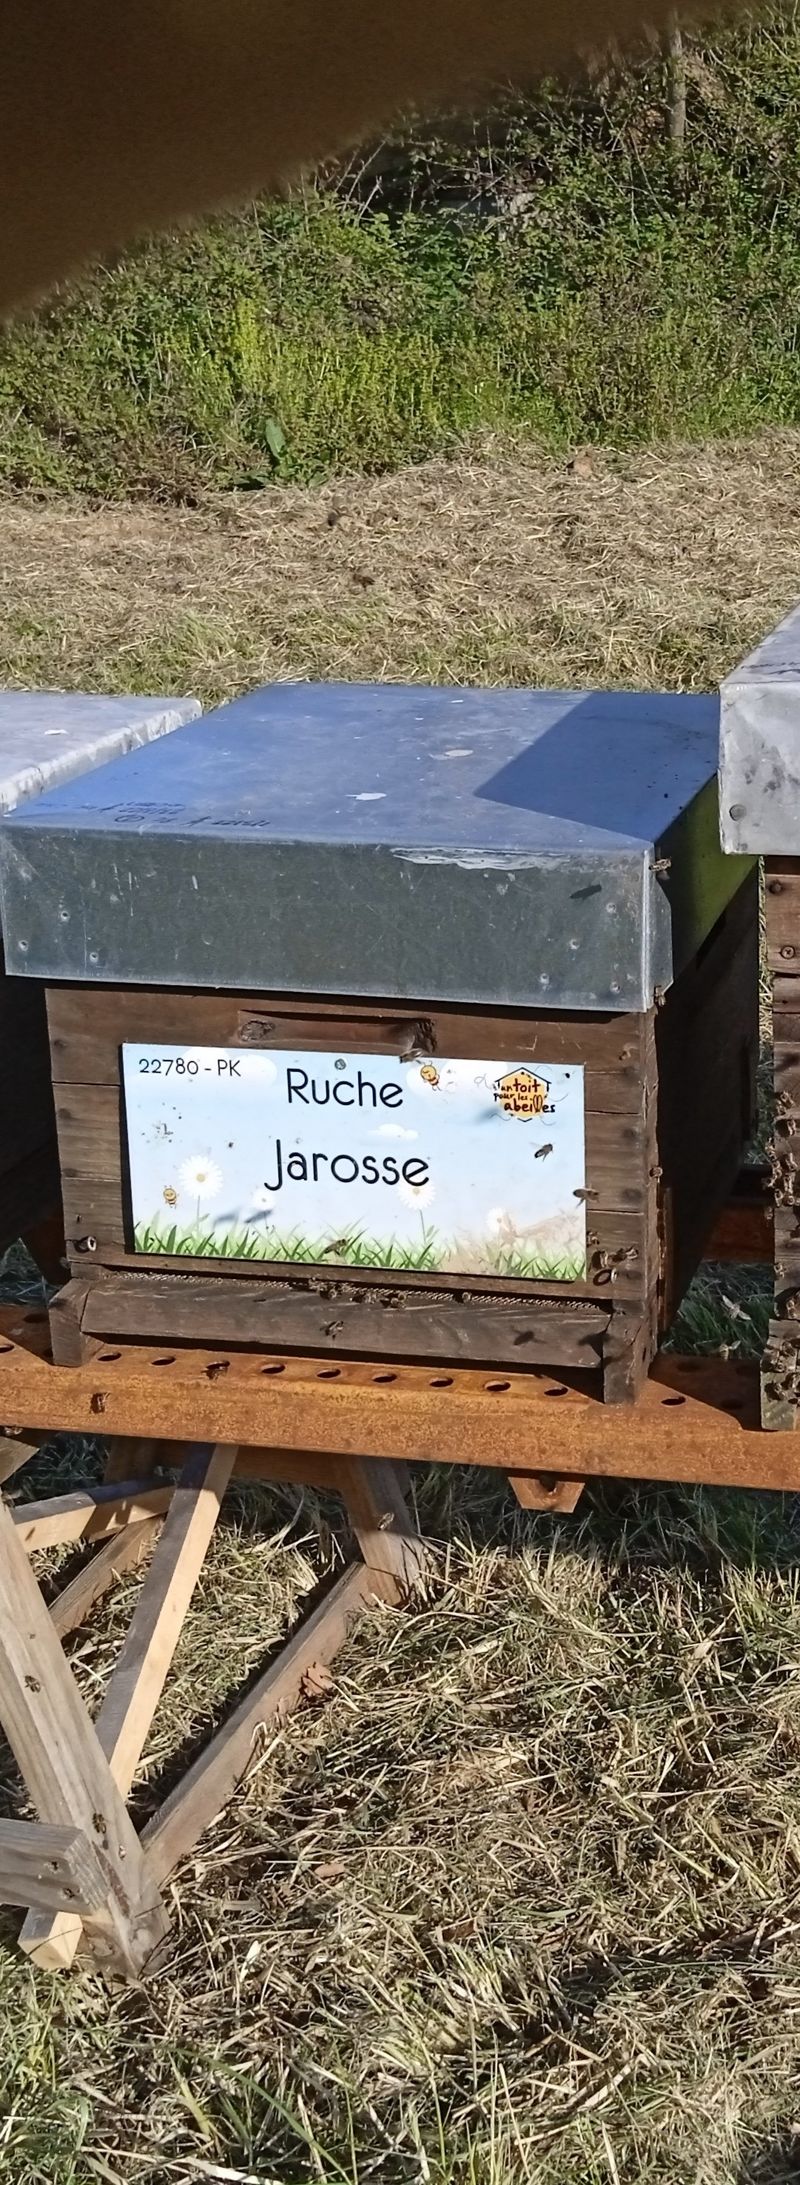 La ruche Jarosse